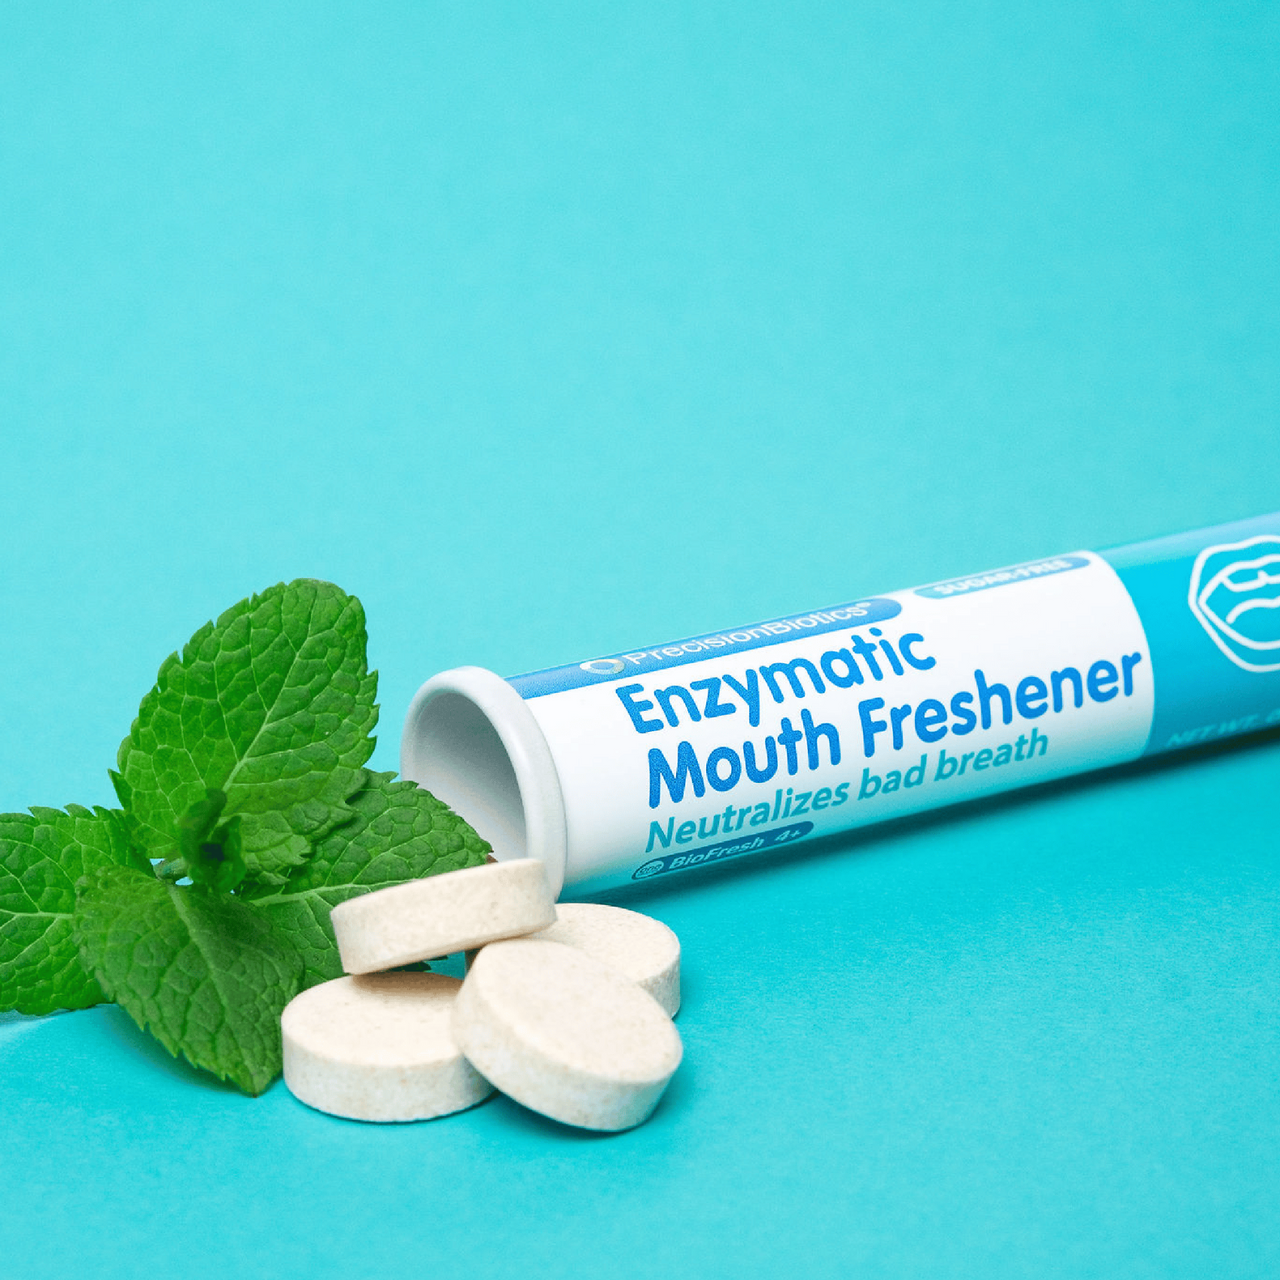 Enzymatic Mouth Freshener